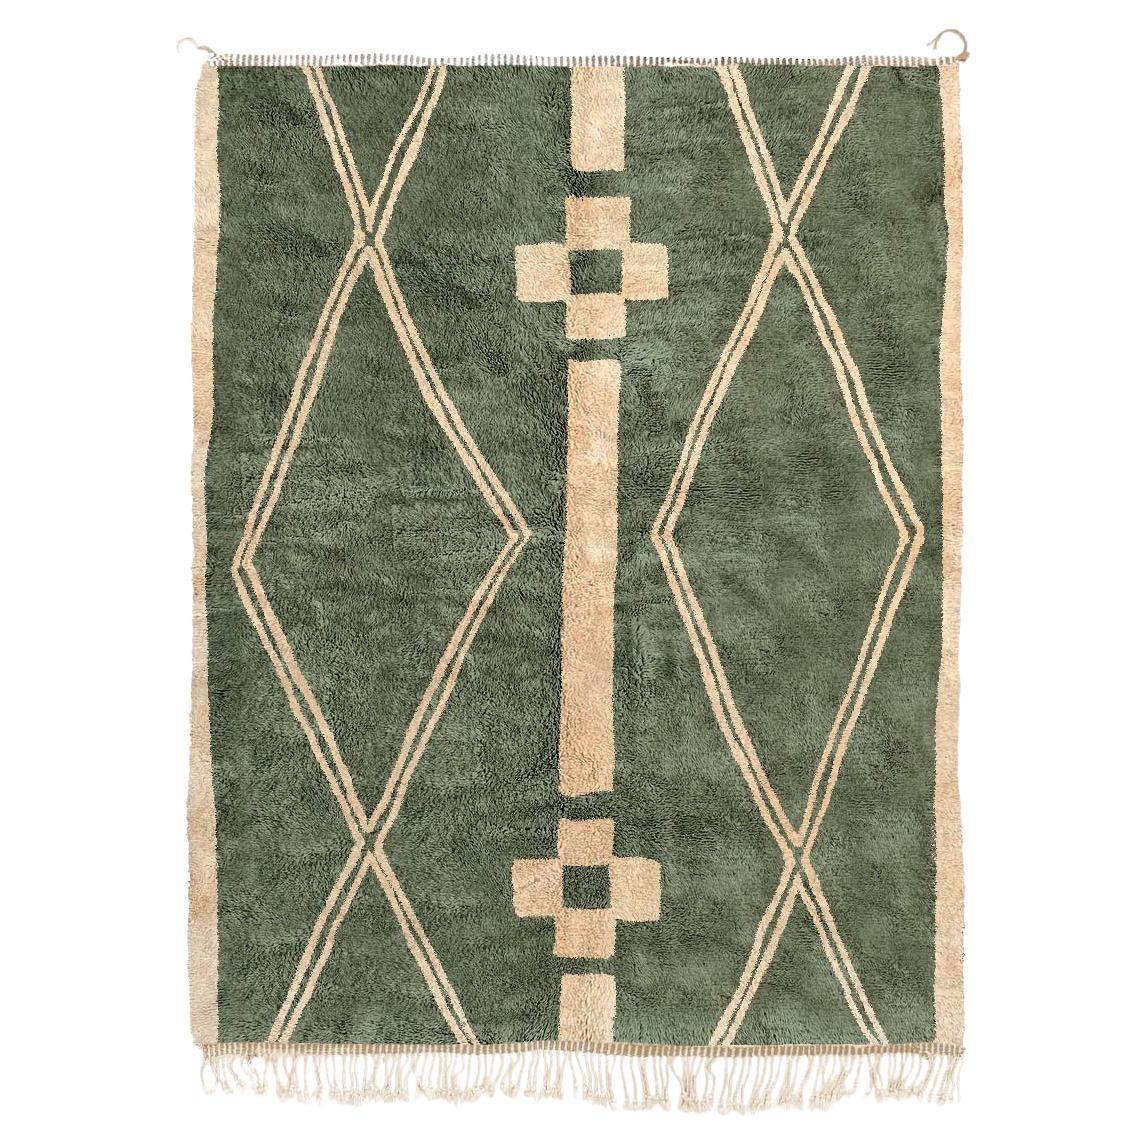 Moroccan Beni Mrirt rug, Tribal Pattern Green Color Berber rug, Custom-made For Sale